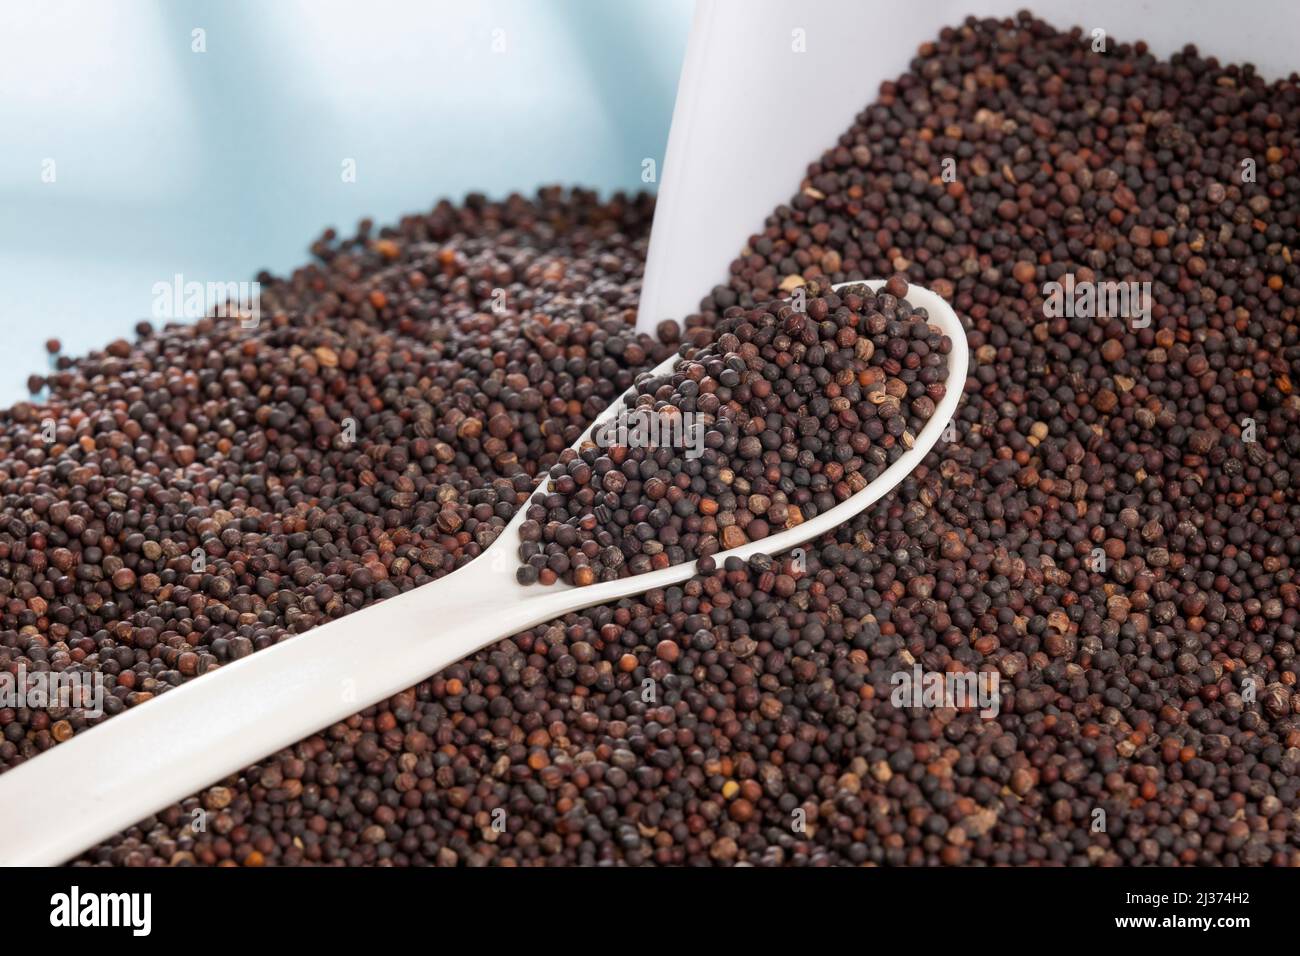 Brassica Nigra - Black Mustard Seeds Or Ajenabe Stock Photo